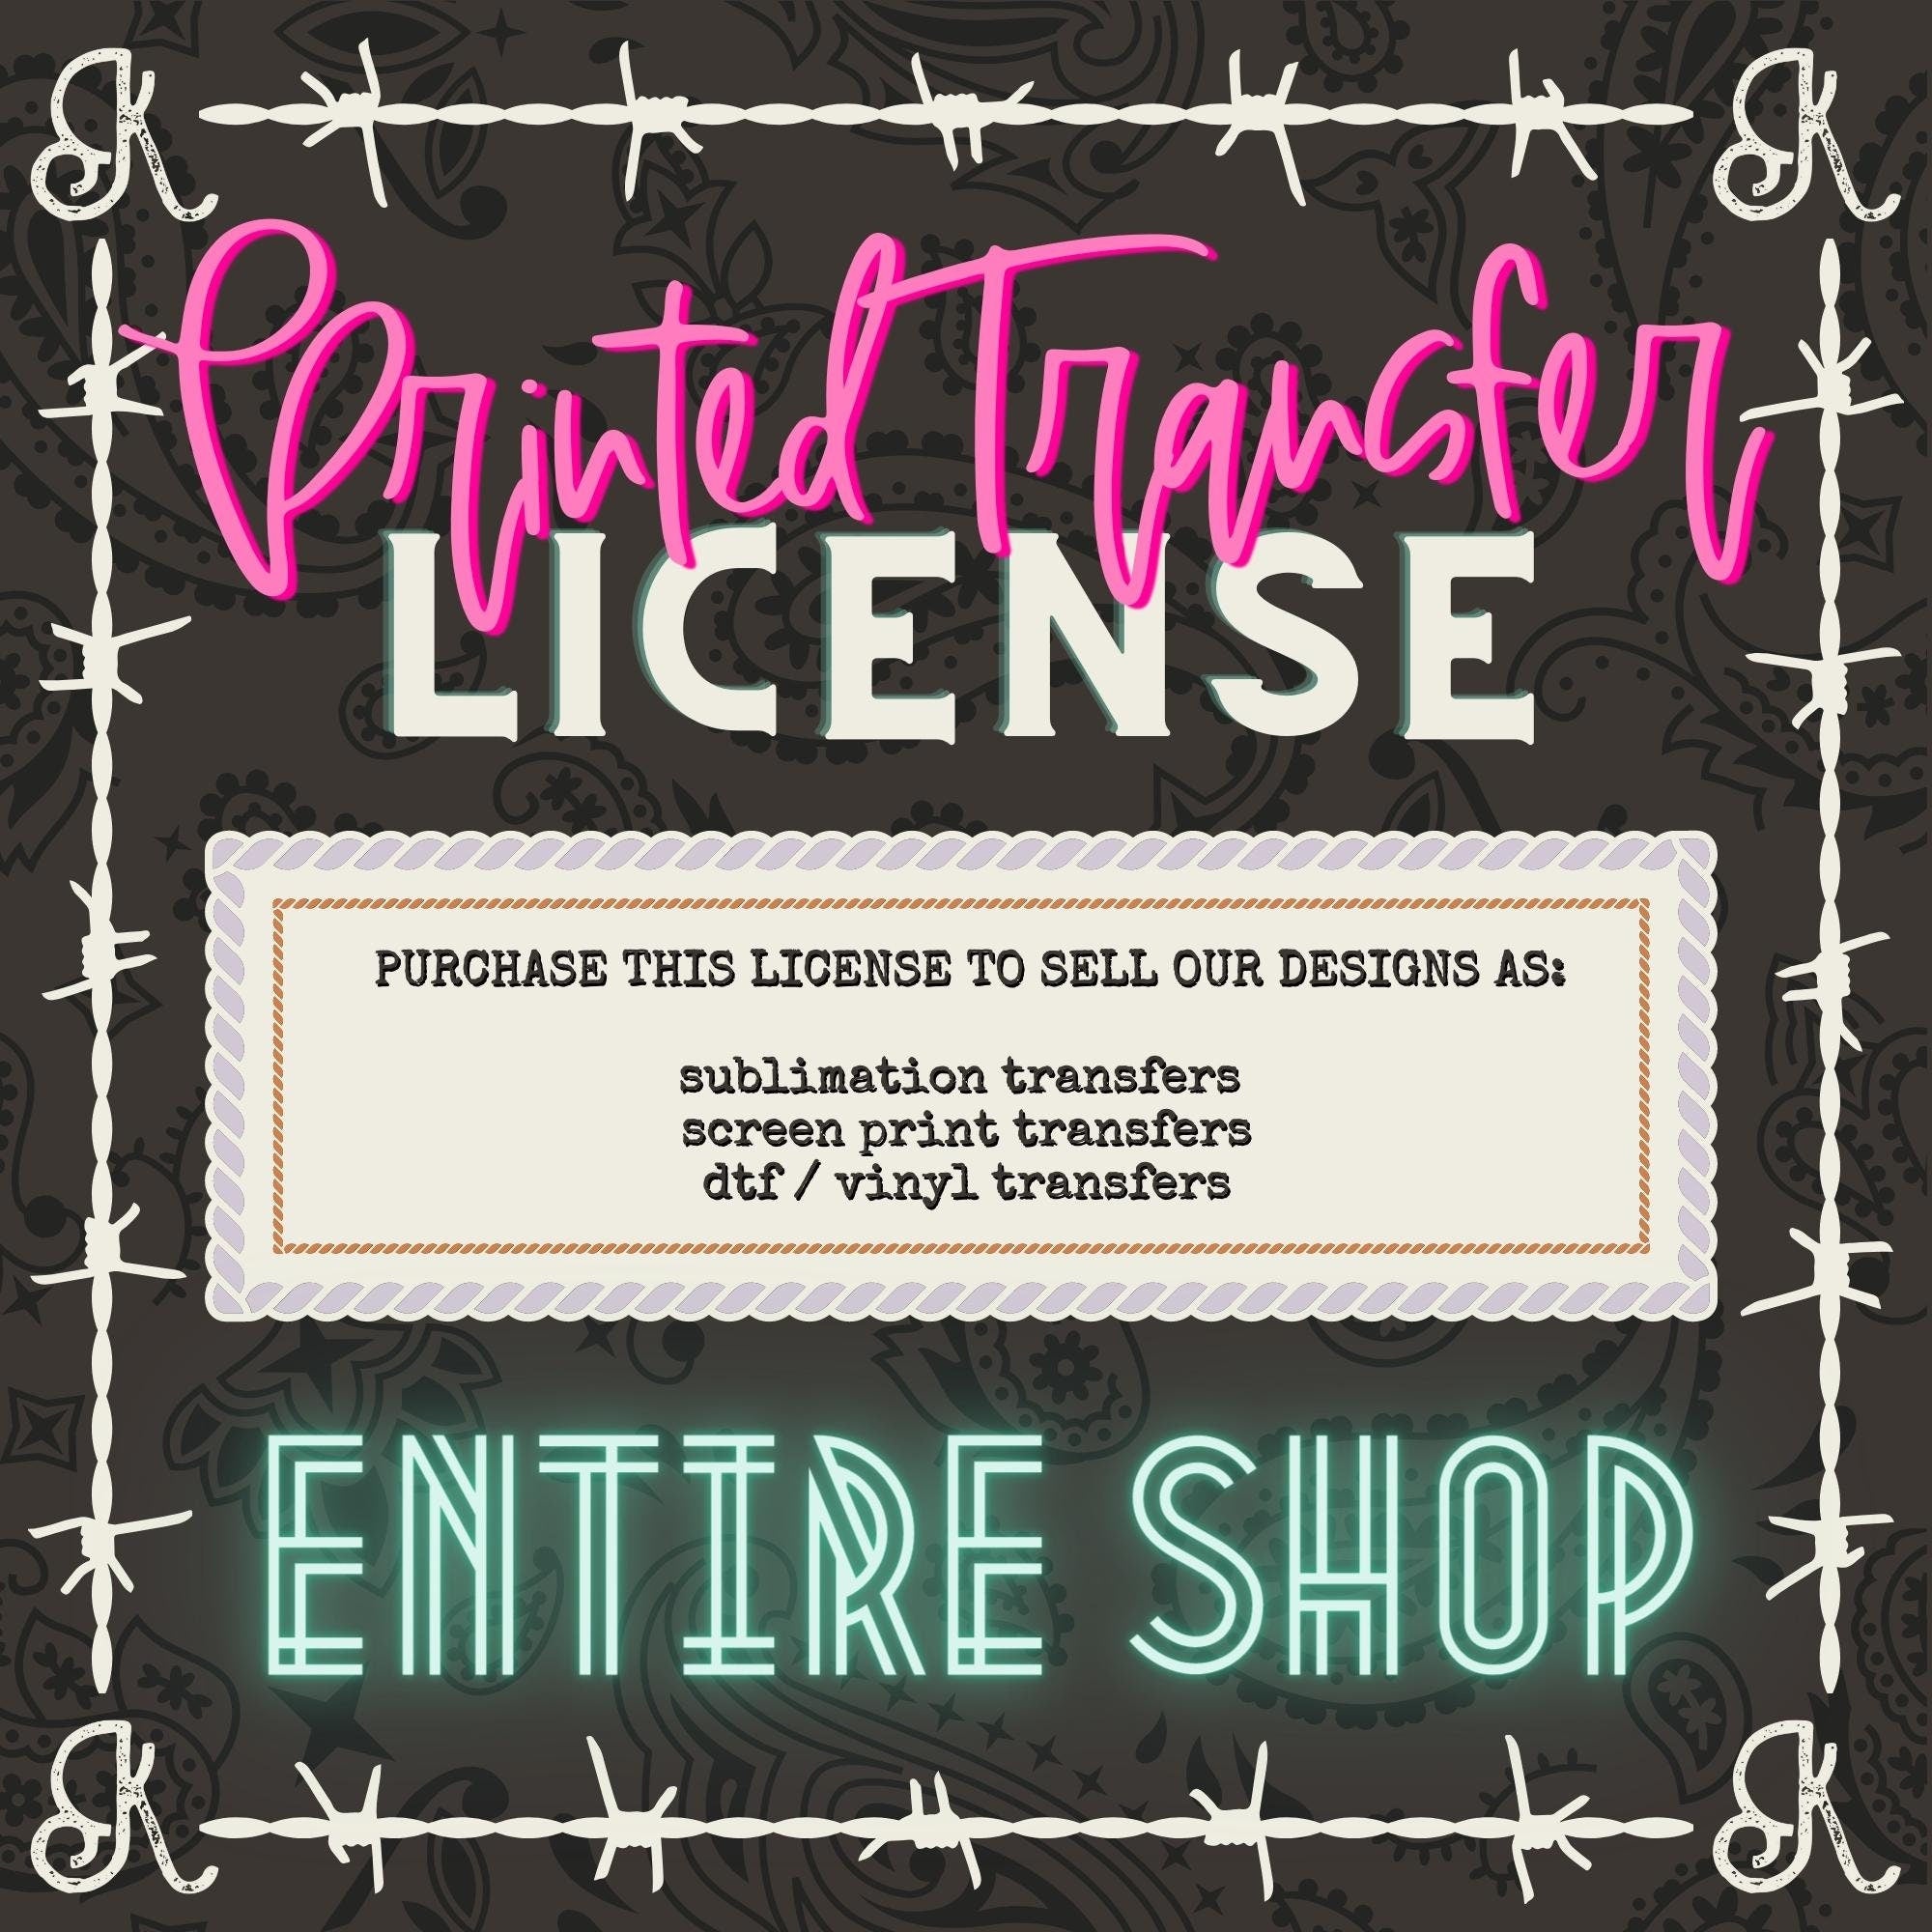 Printed Transfer License Entire Shop